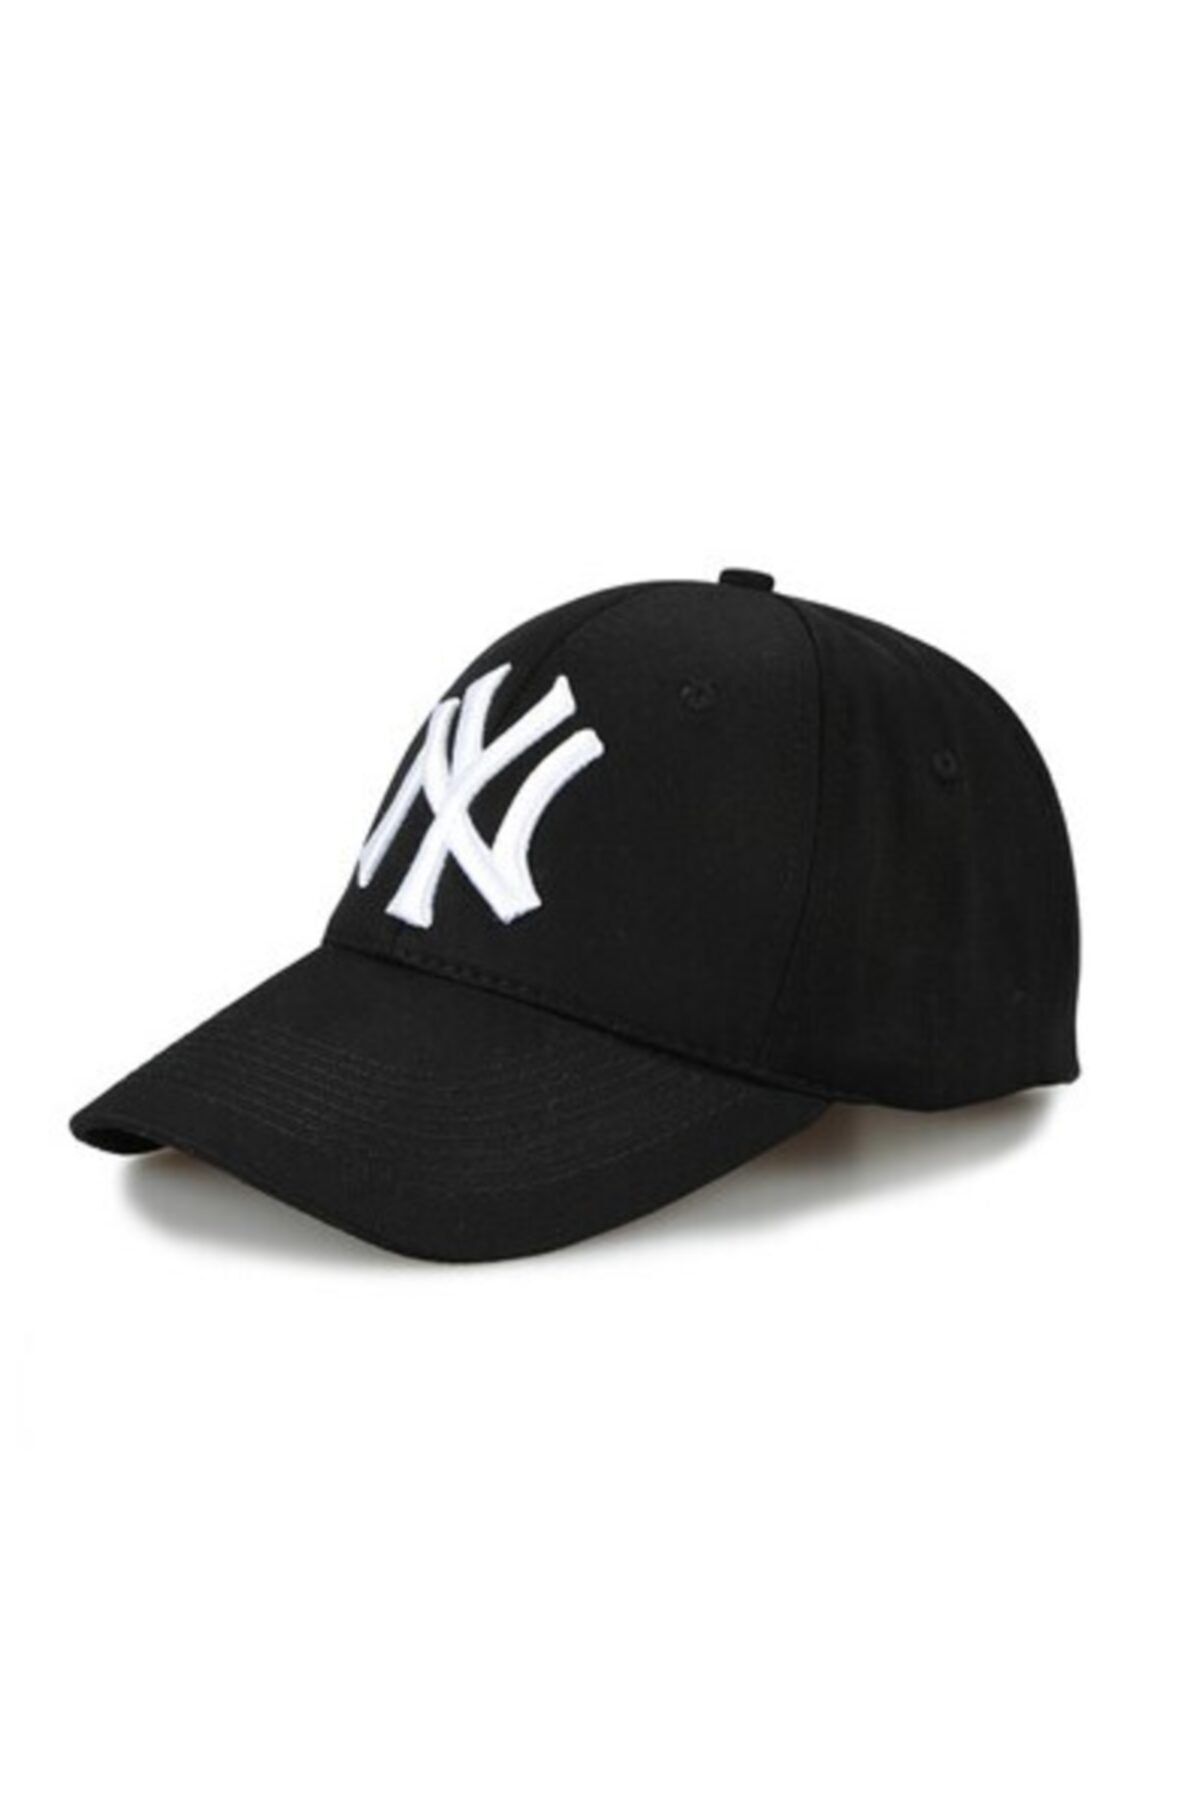 CosmoOutlet Ny New York Logolu Unisex Siyah Şapka